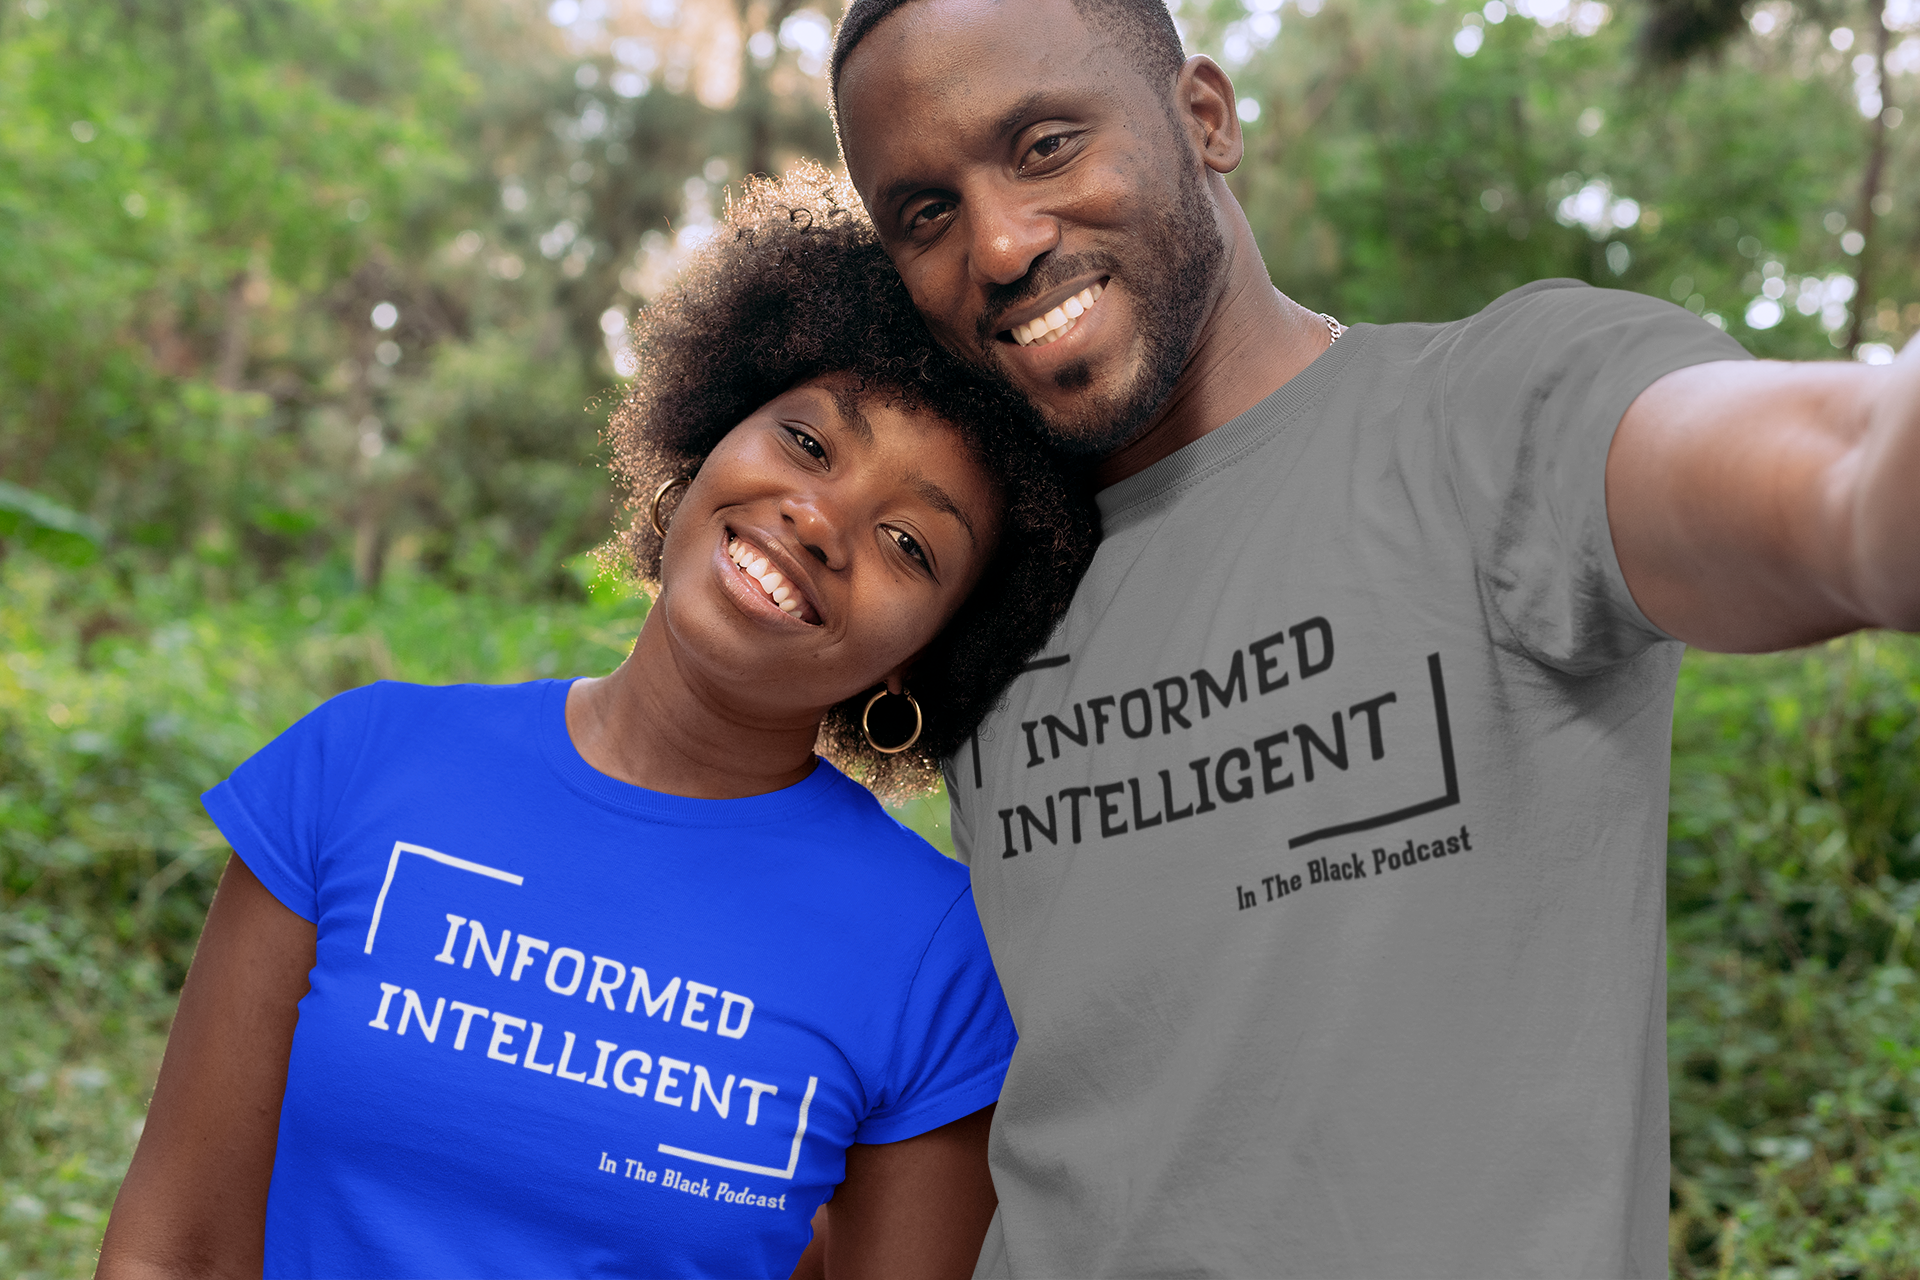 In The Black Podcast "Informed. Intelligent" 